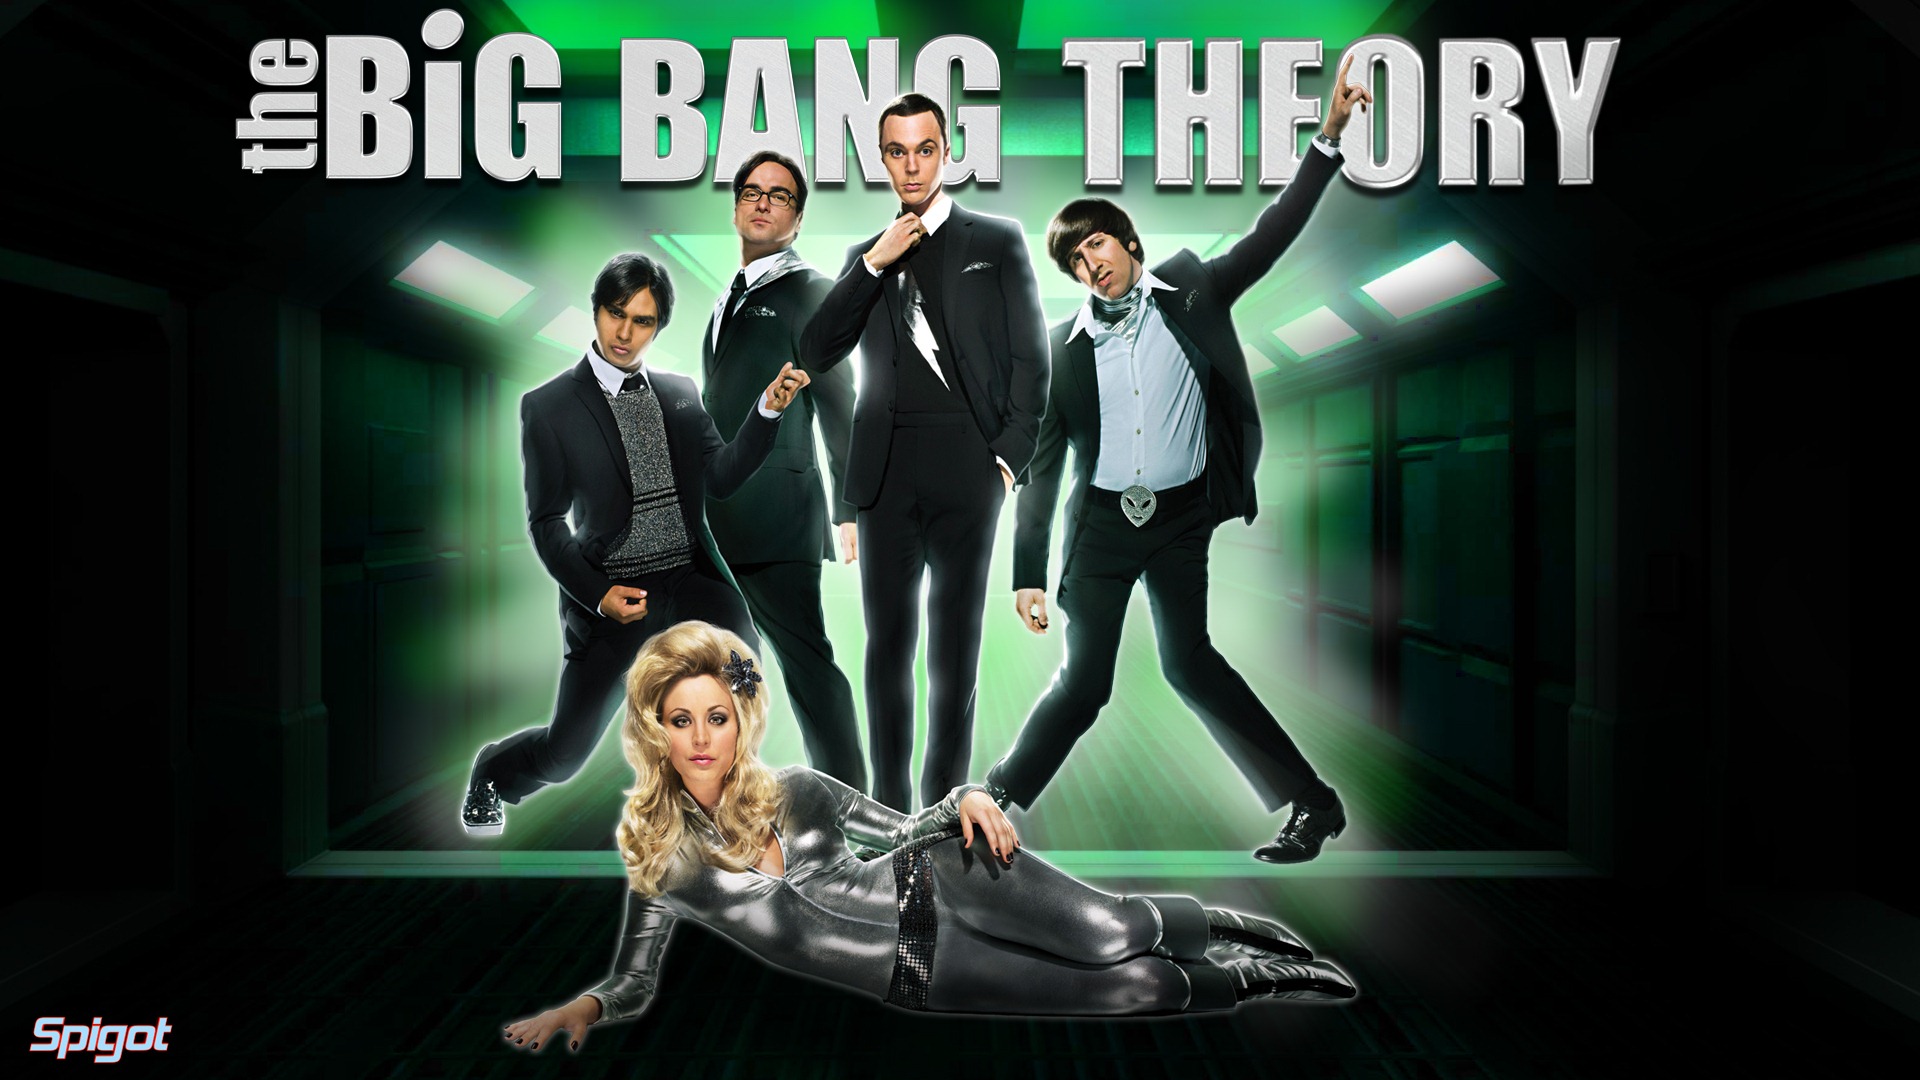 The Big Bang Theory ビッグバン理論tvシリーズhdの壁紙 6 19x1080 壁紙ダウンロード The Big Bang Theory ビッグバン理論tvシリーズhdの壁紙 映画 壁紙 V3の壁紙